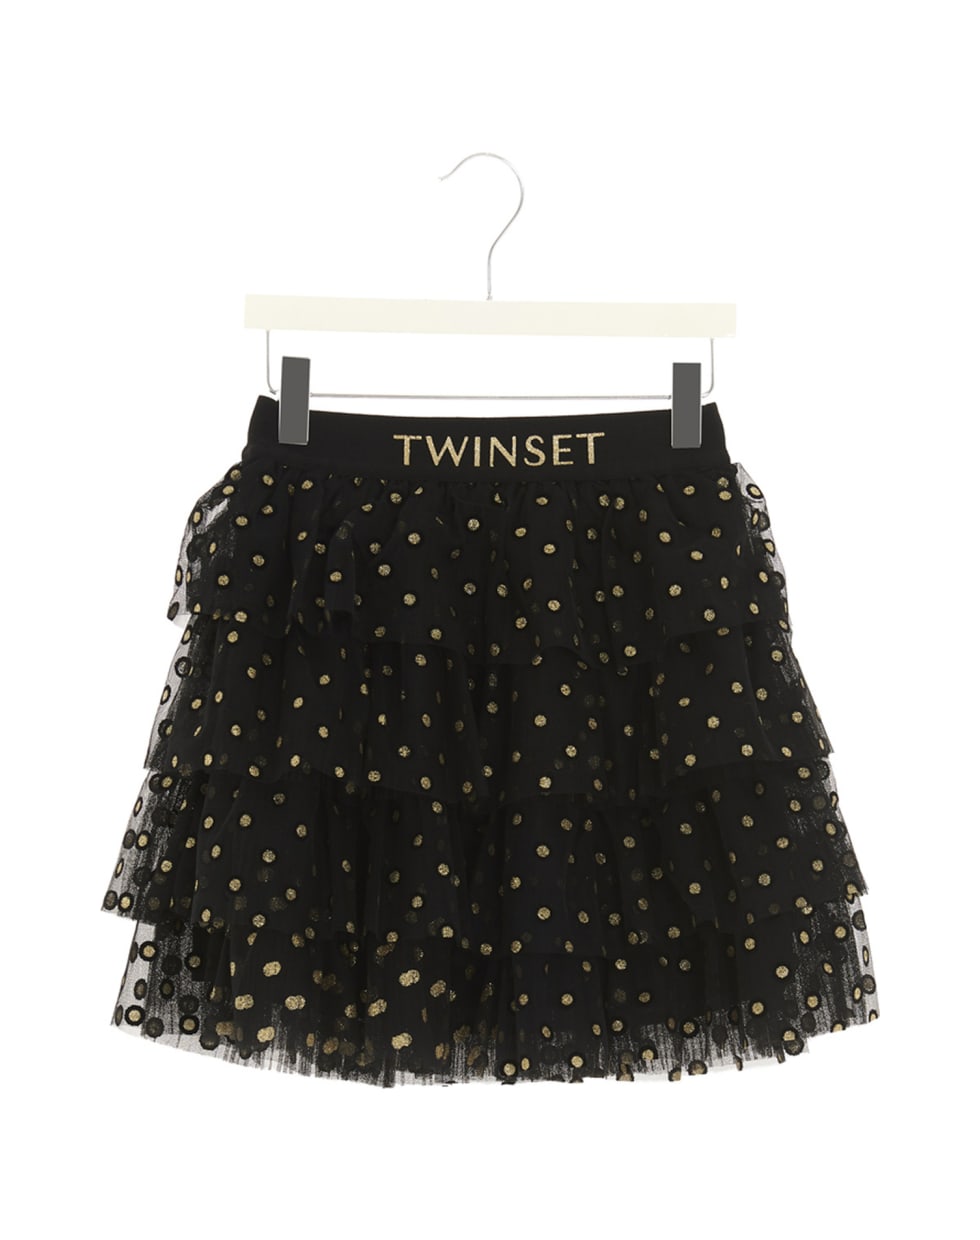 TwinSet Skirt - Black